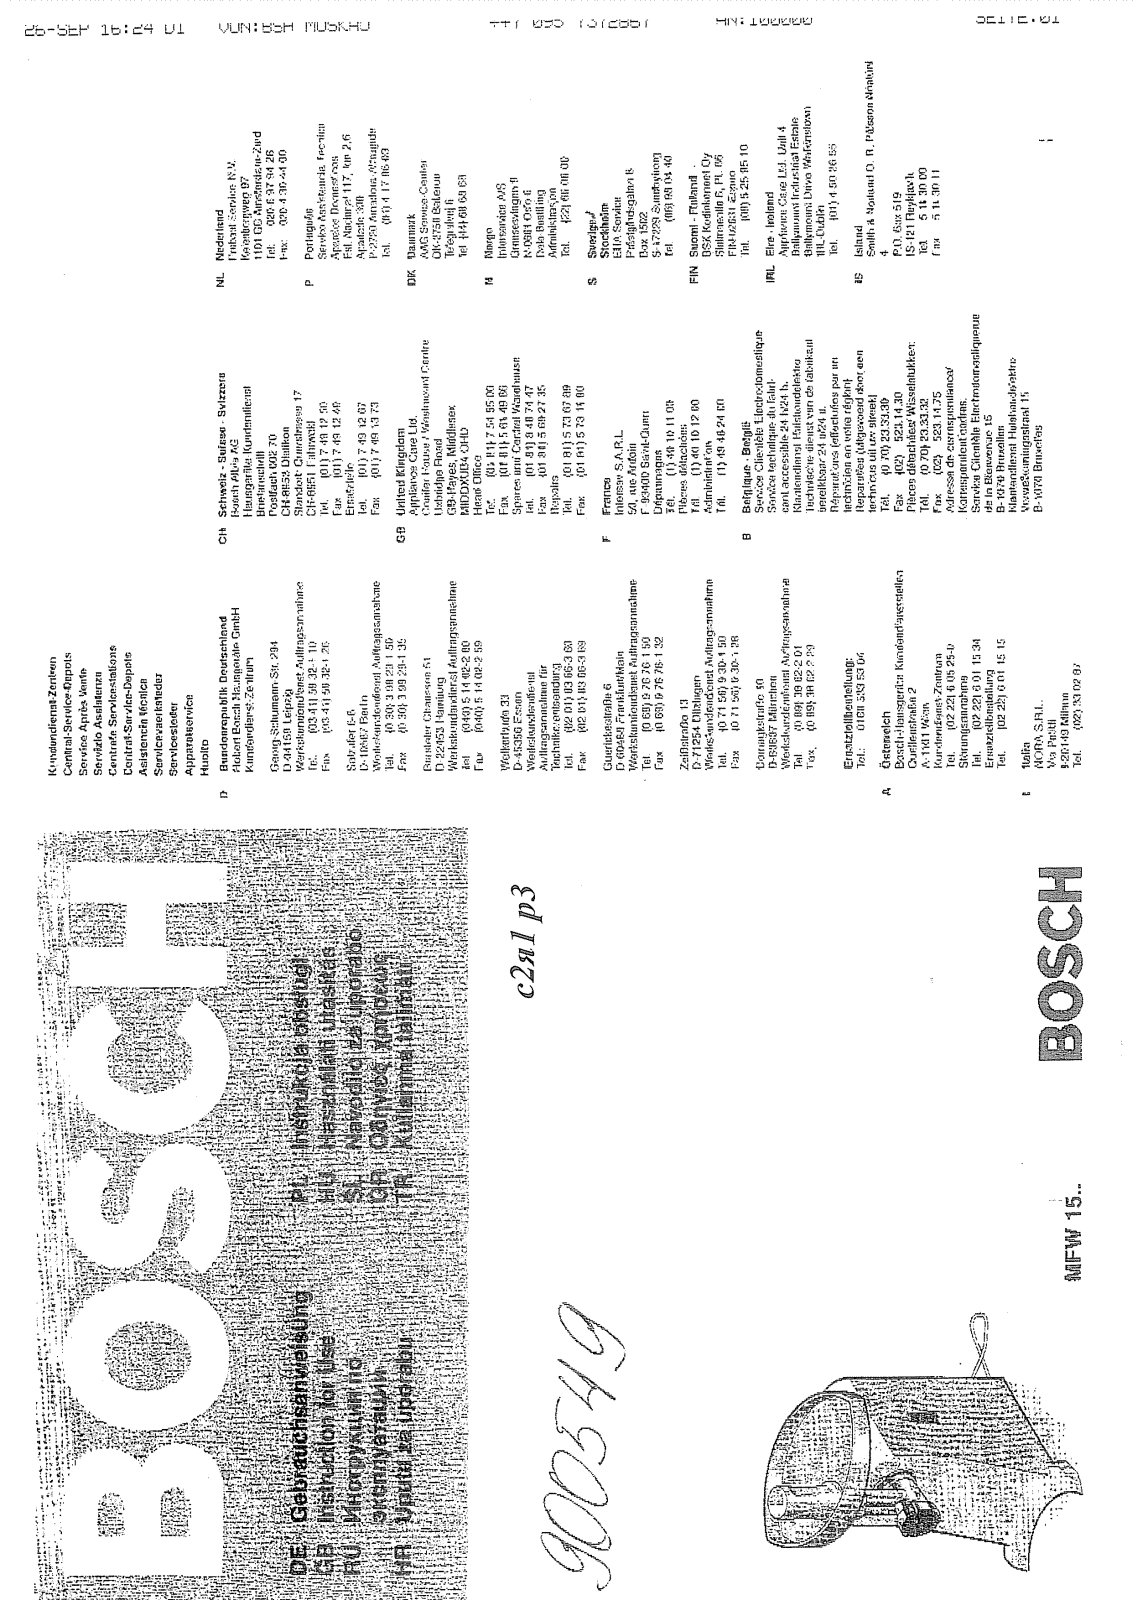 Bosch MFW 1501 User Manual